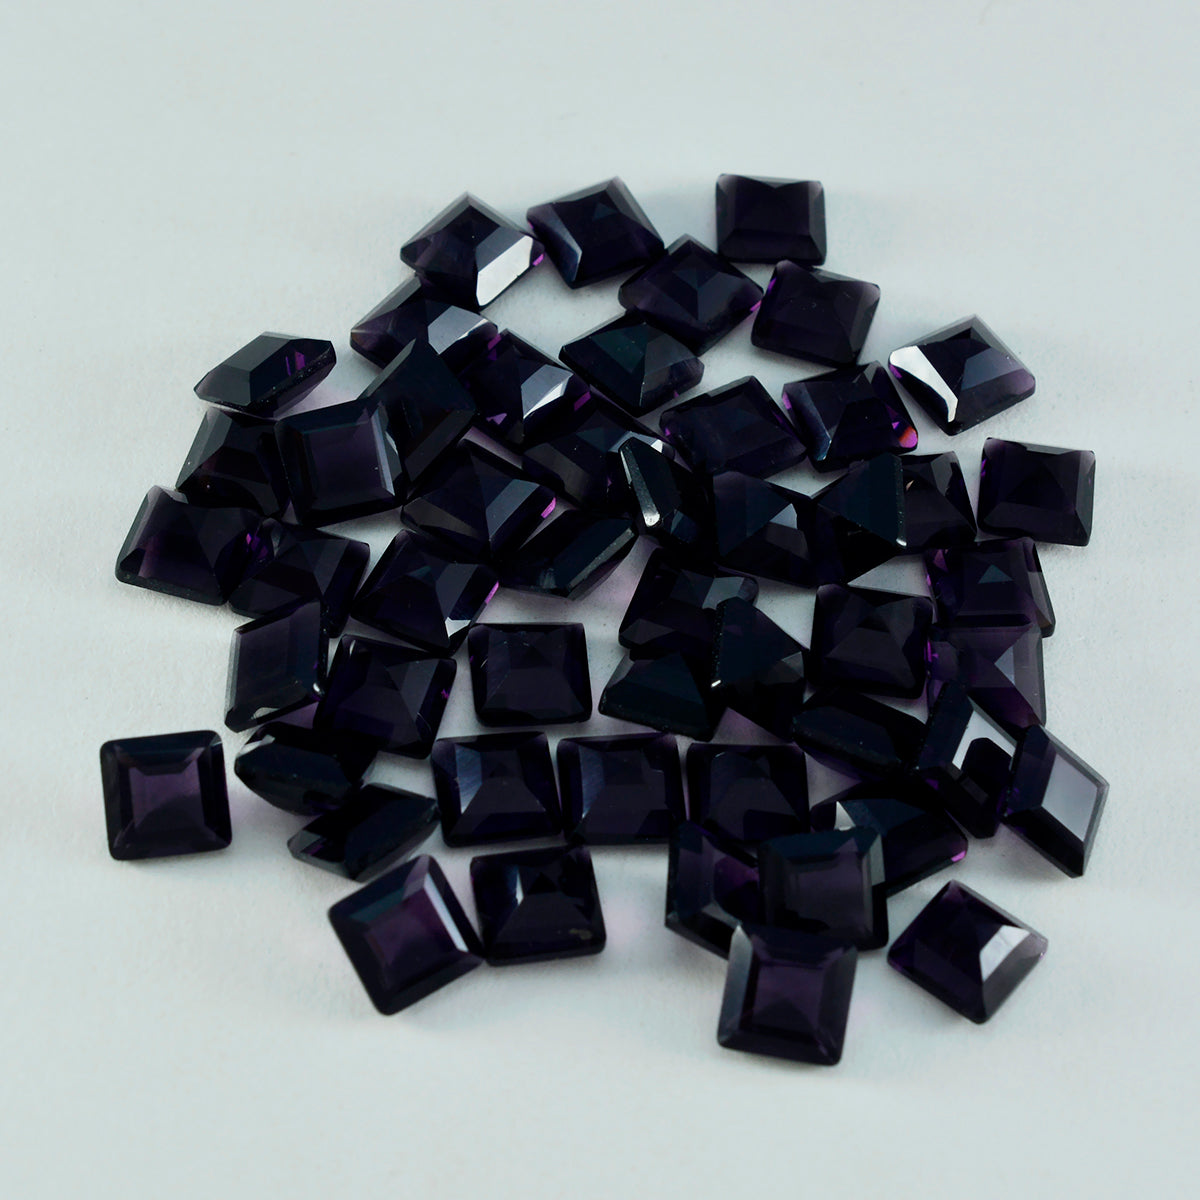 riyogems 1 pezzo di ametista viola cz sfaccettata 7x7 mm di forma quadrata, pietra di ottima qualità